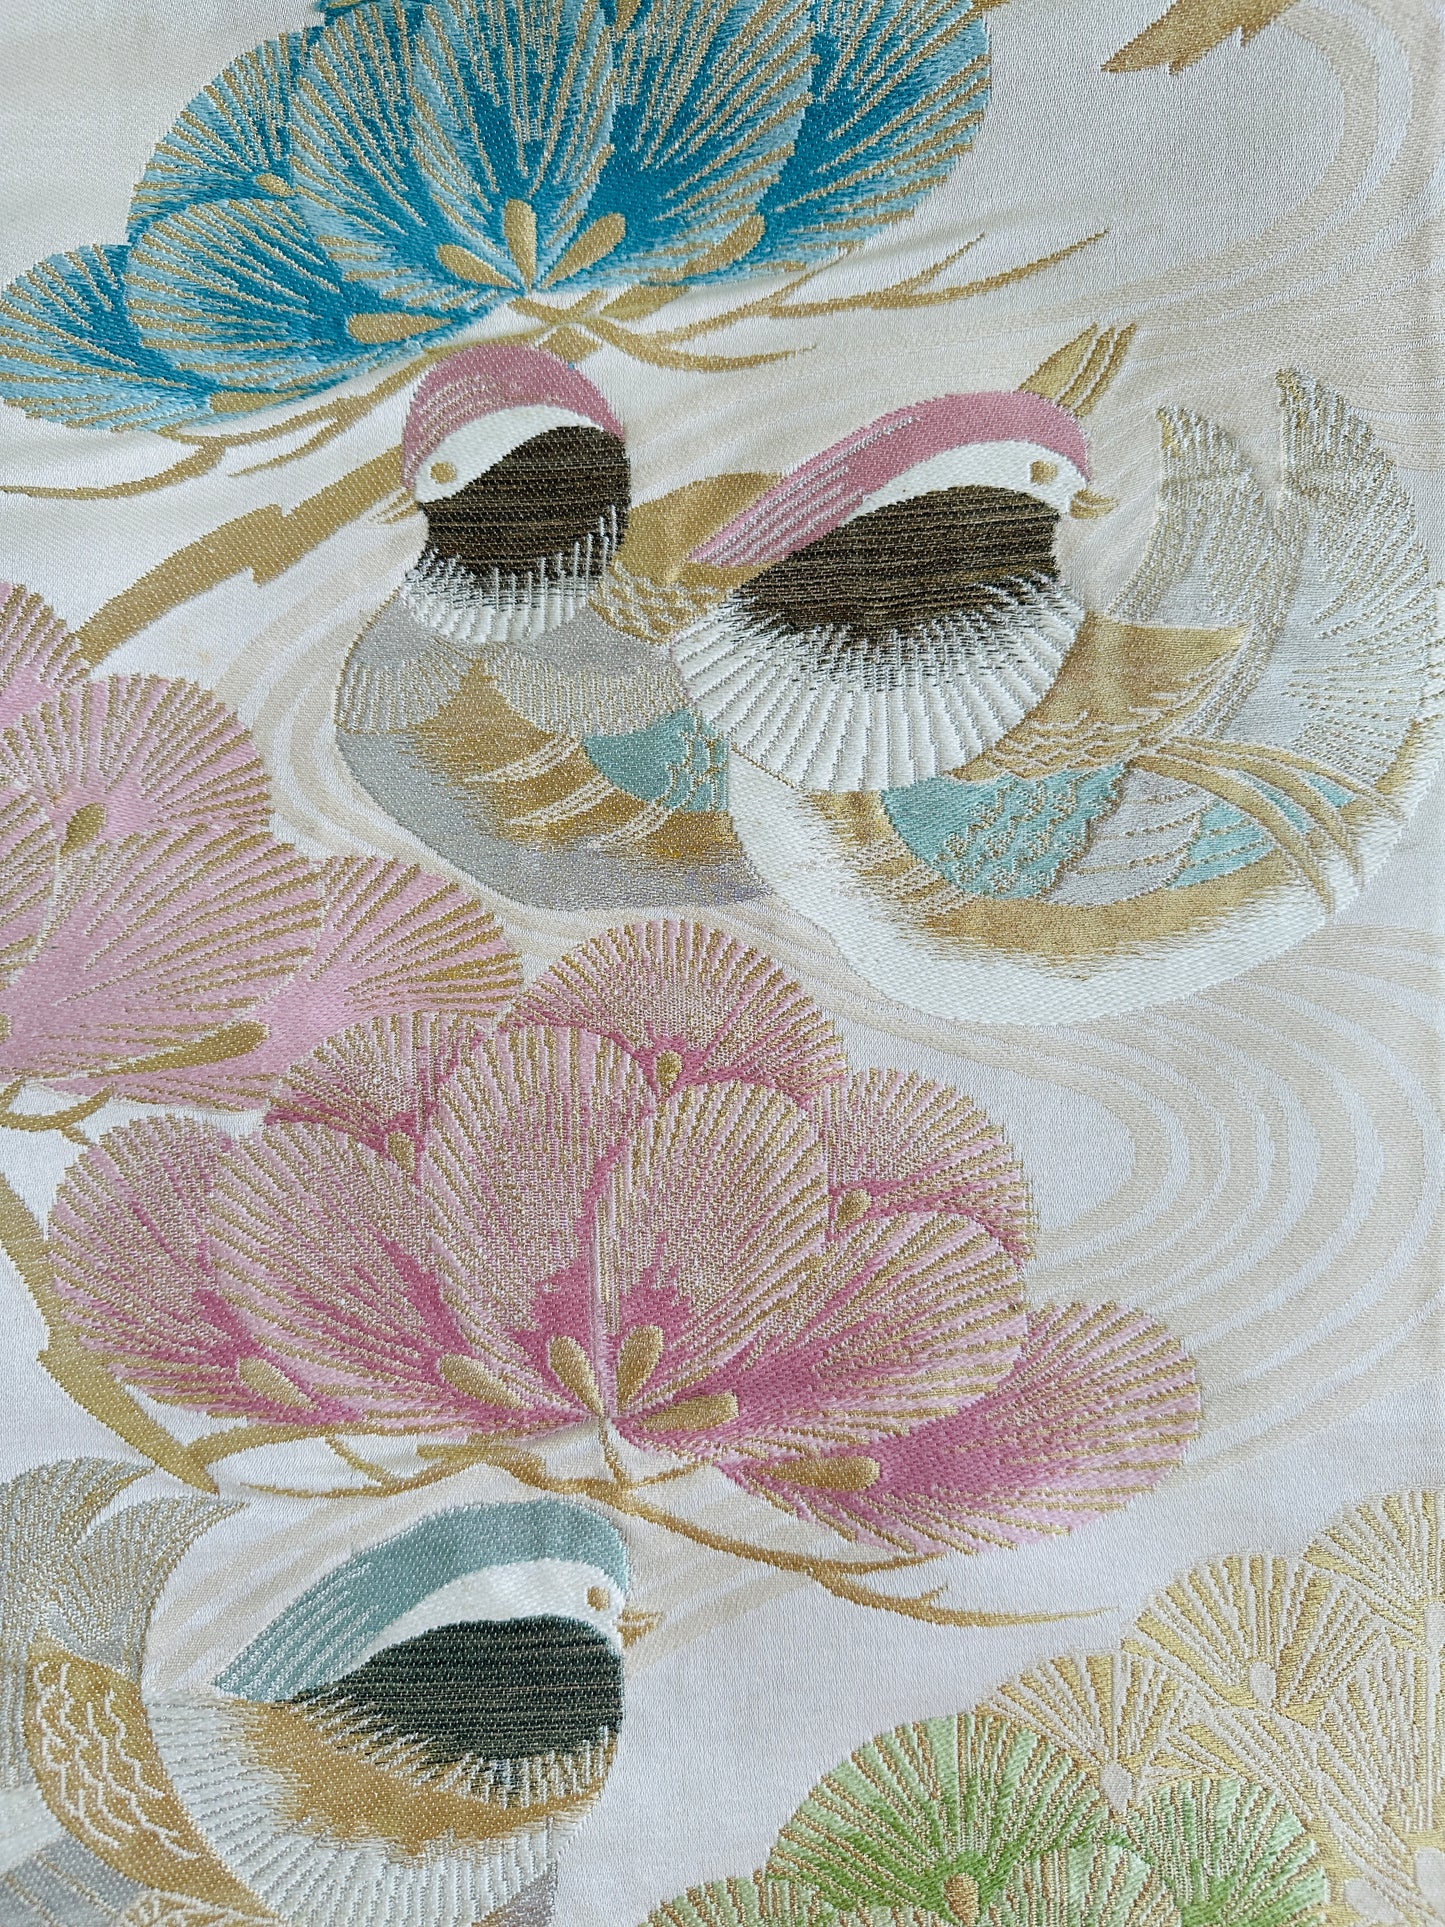 【Japanisches Interieur】 obi-art/"oshidori" (zwei Vögel), Wandkunst, asiatisches Interieur, japanischer Kimono, japanische Kleidung, japanische Geschenke